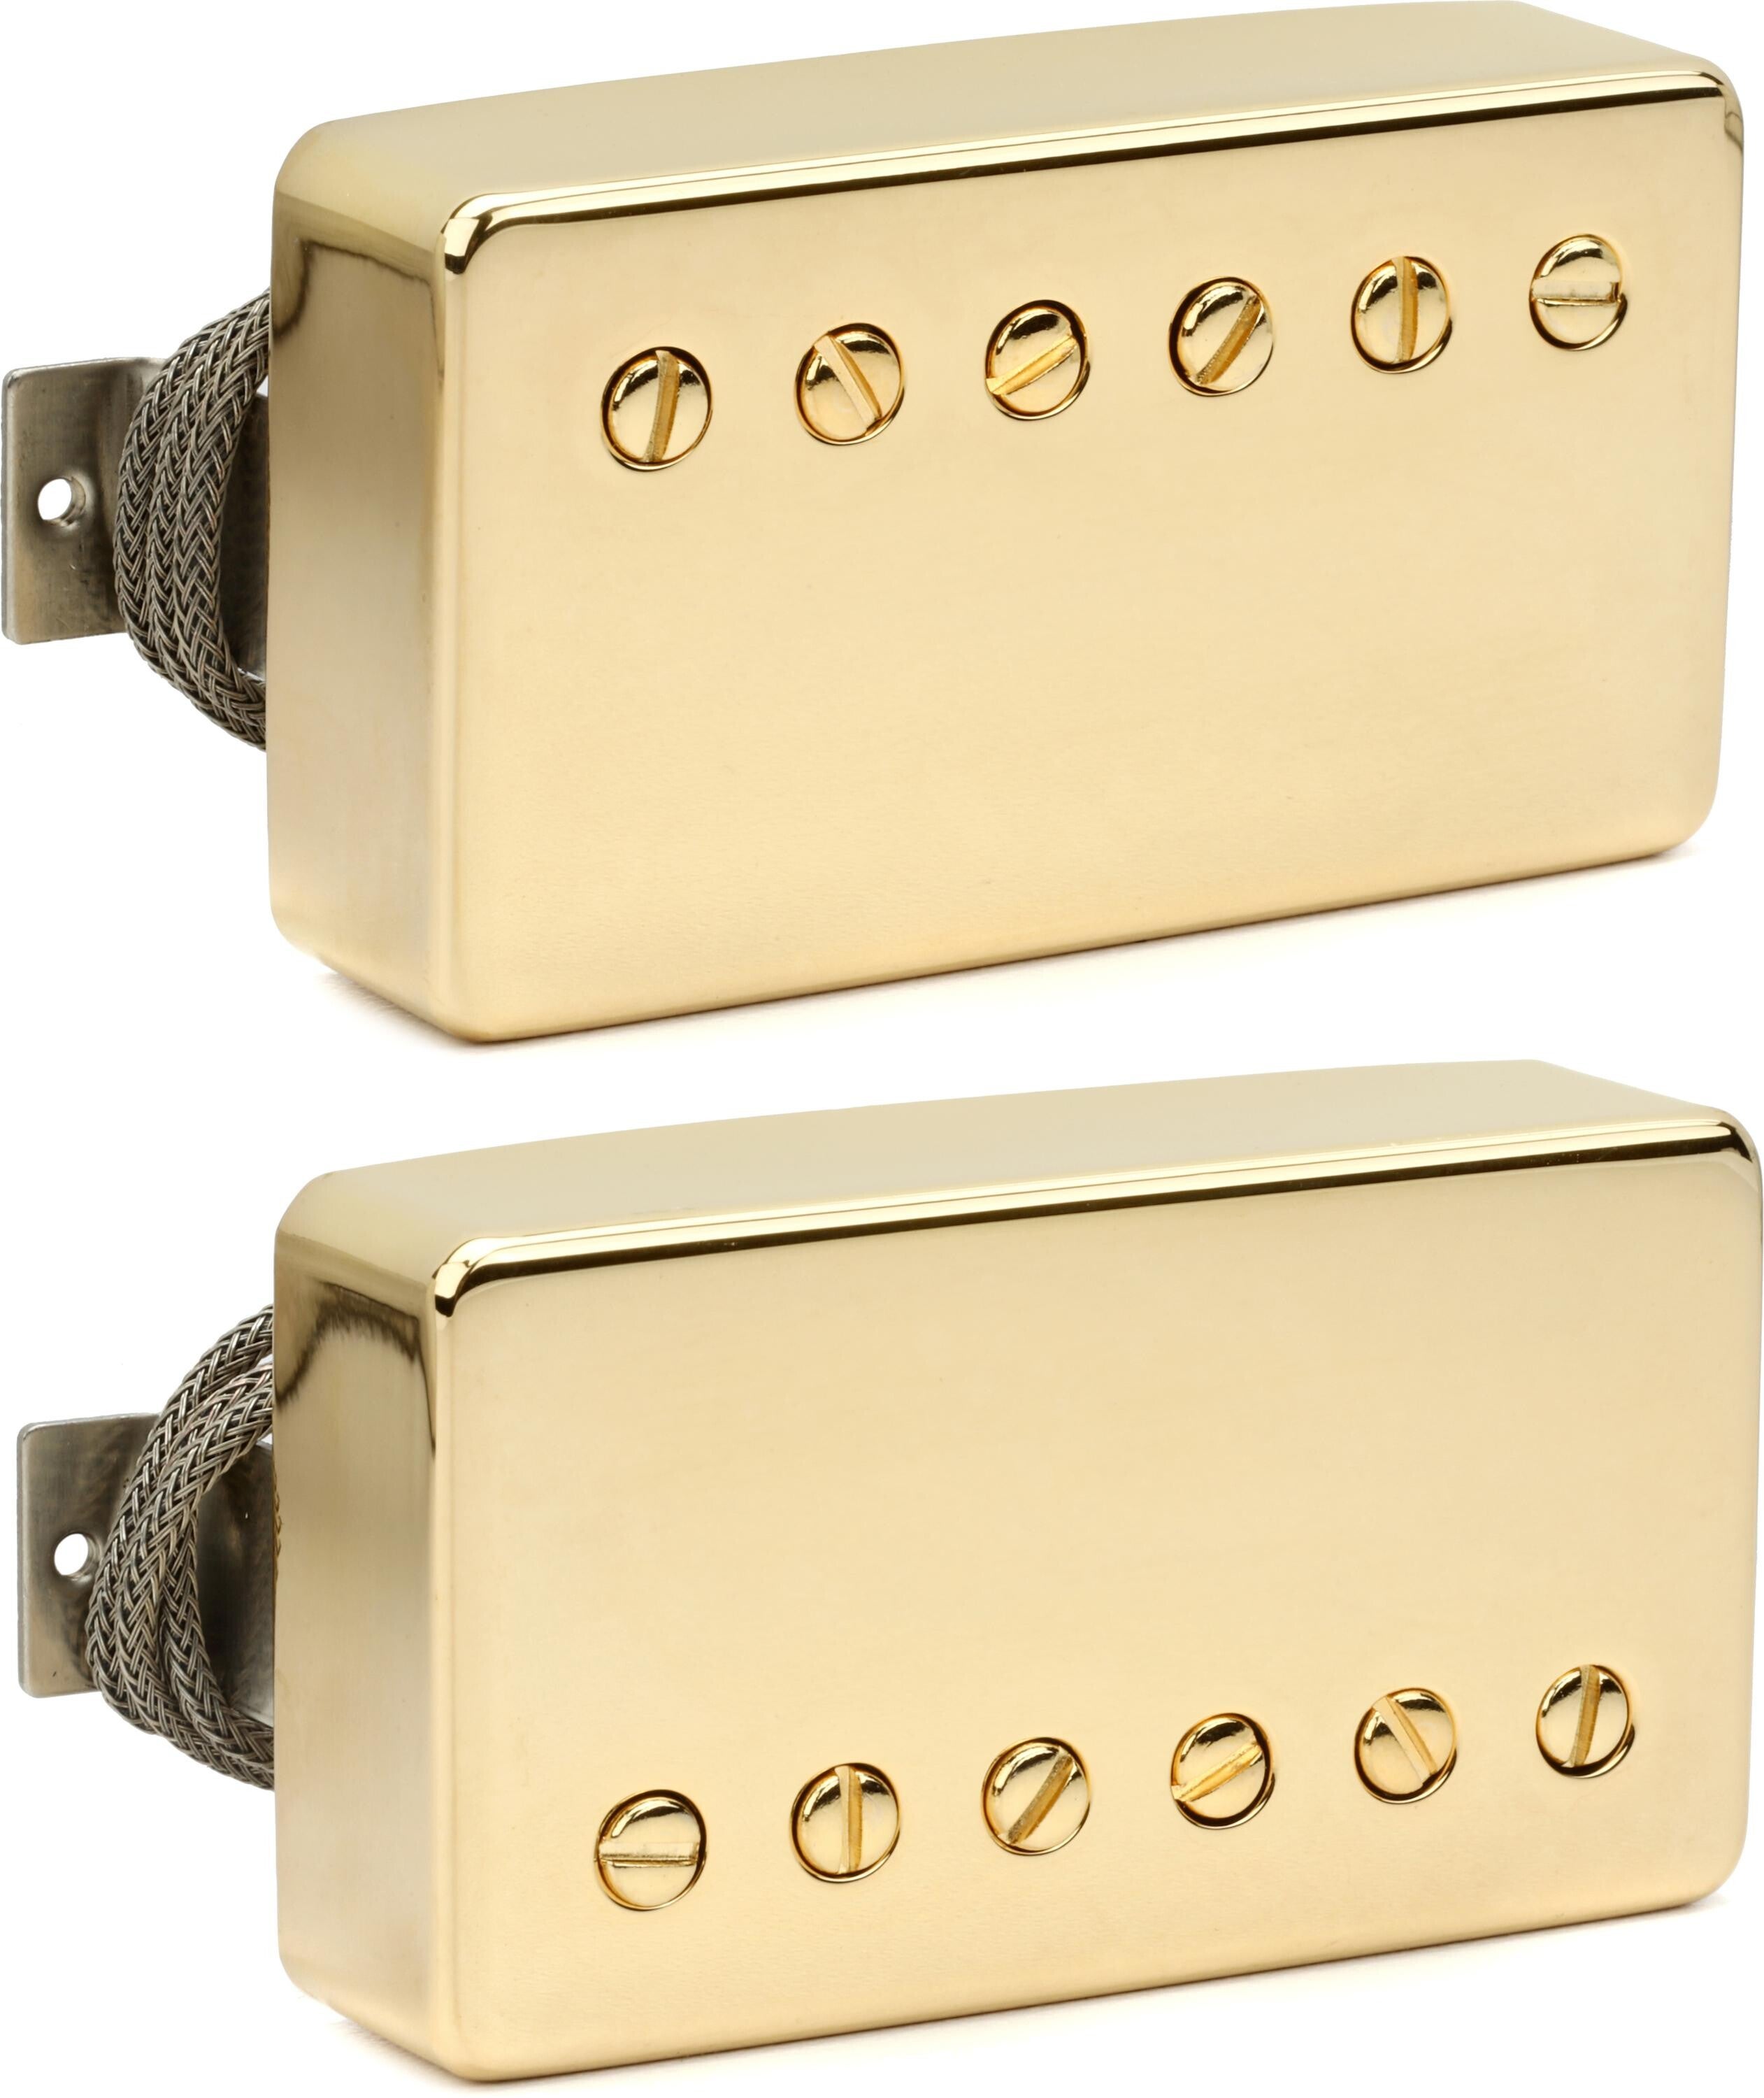 Gibson Accessories Custombucker Humbucker Pickup Matched Set - Gold